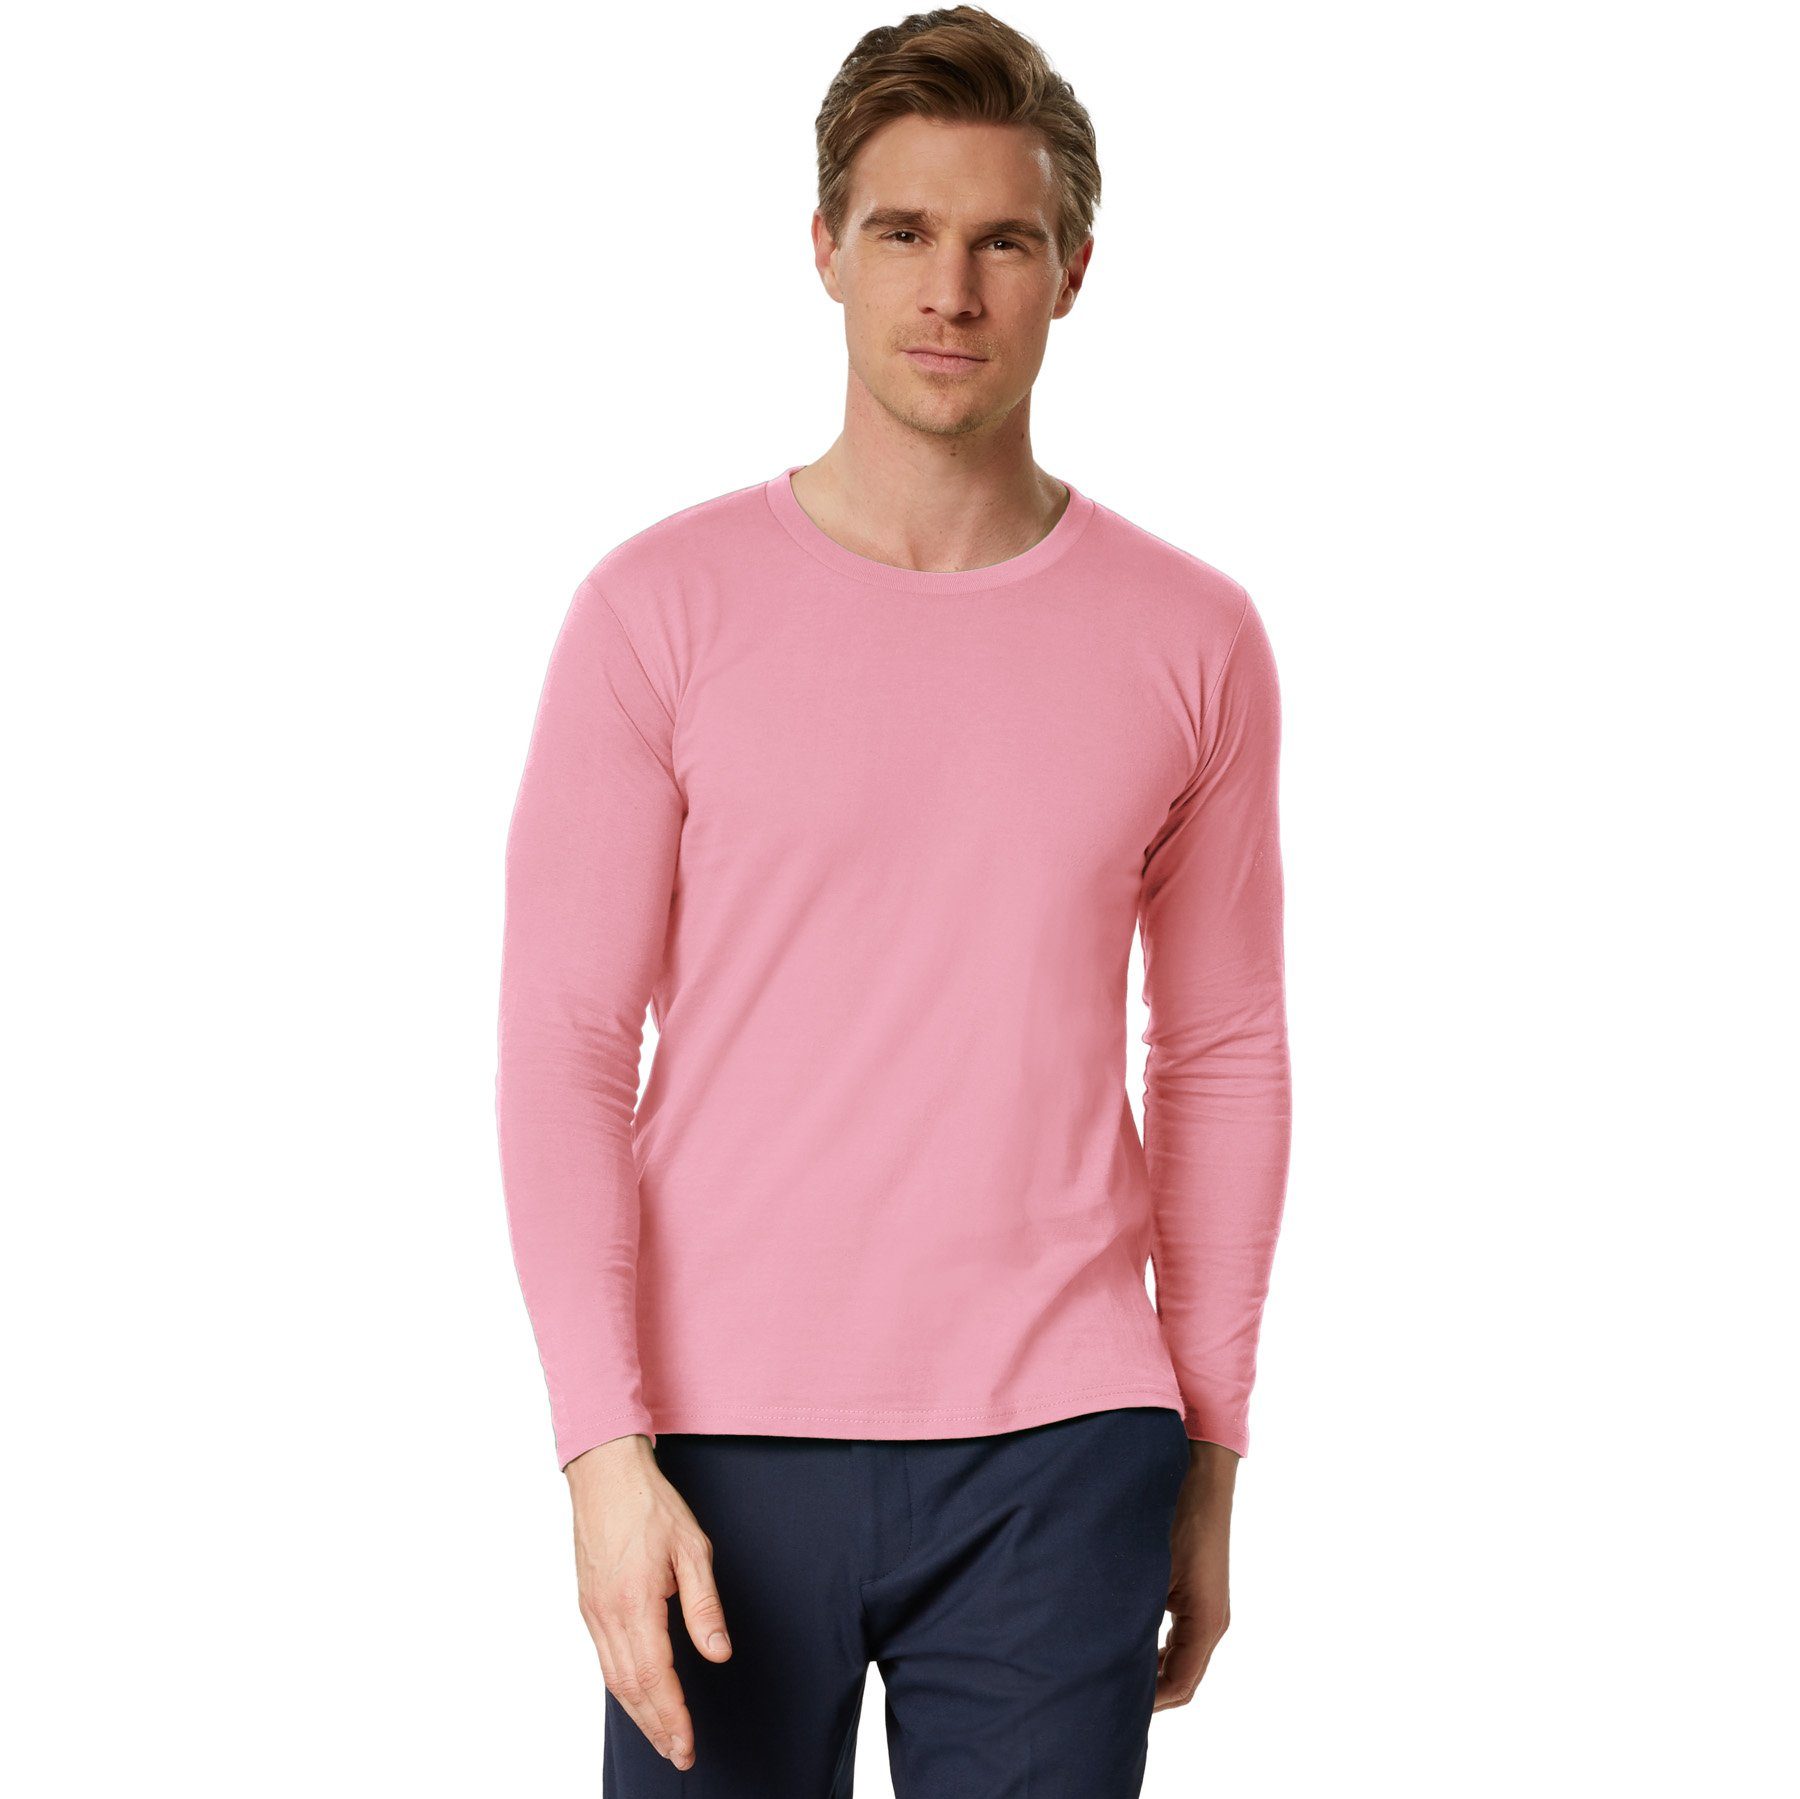 dressforfun Longsleeve Langarm-Shirt Rundhals Männer rosa